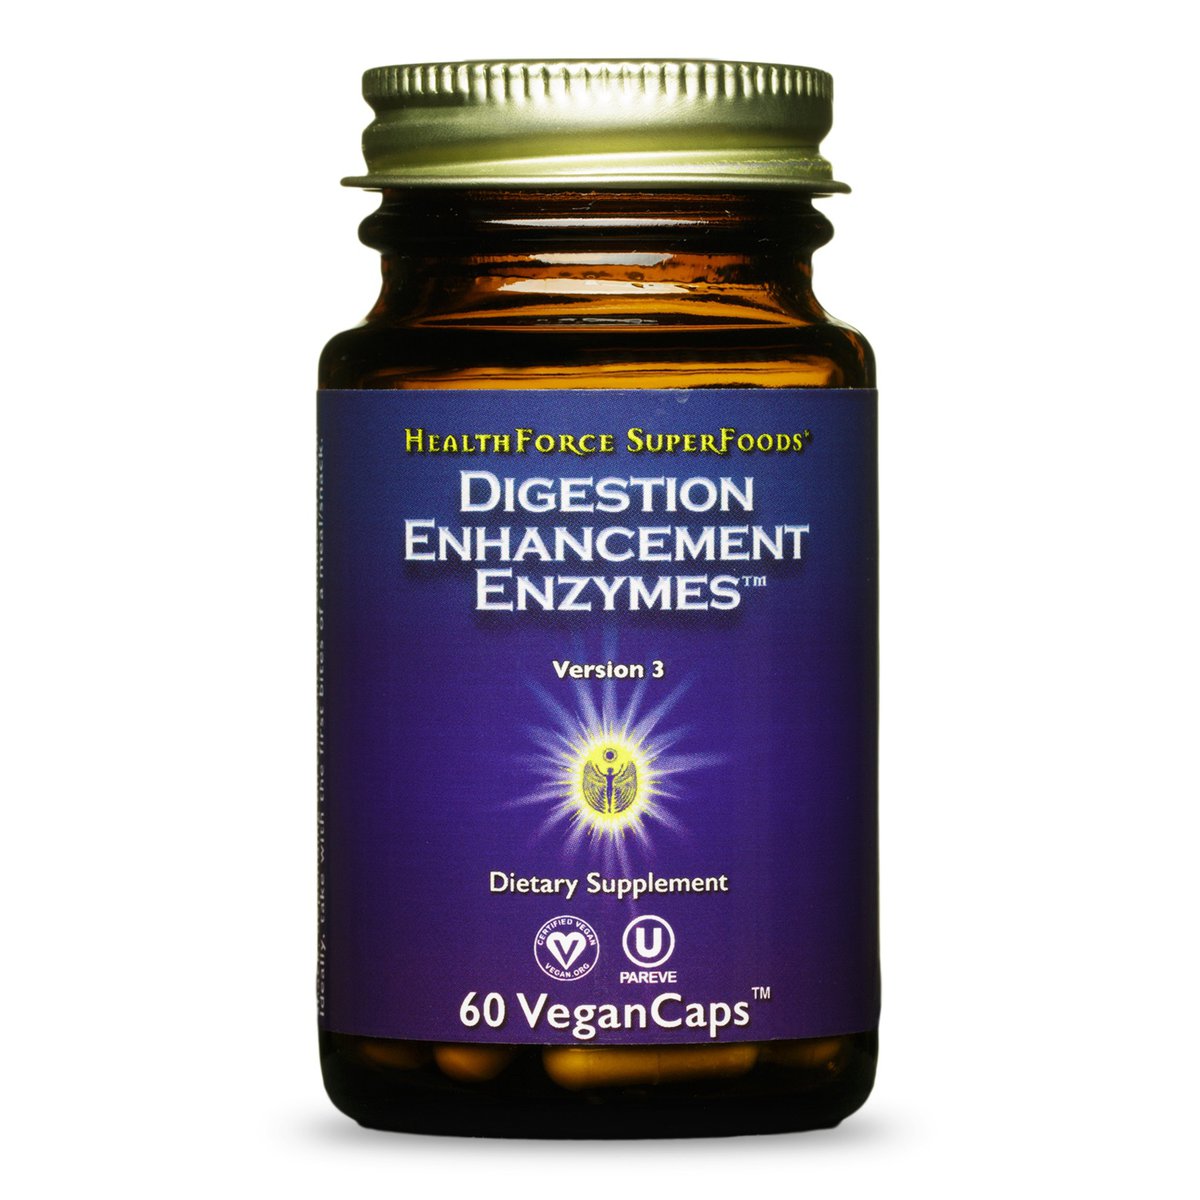 Digestion Enhancement Enzymes™